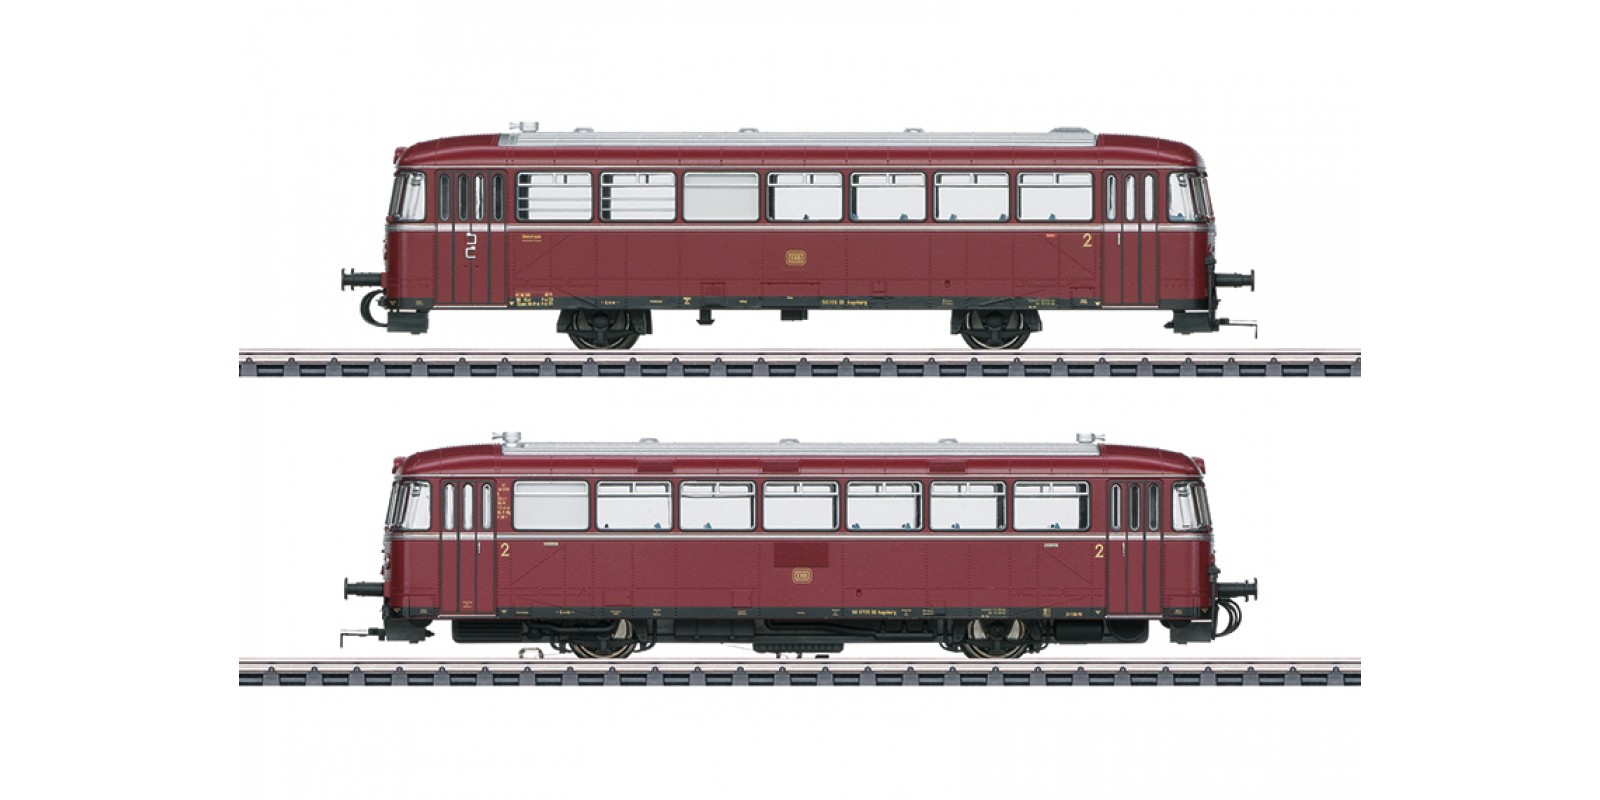 39978 Class VT 98.9 Powered Rail Car